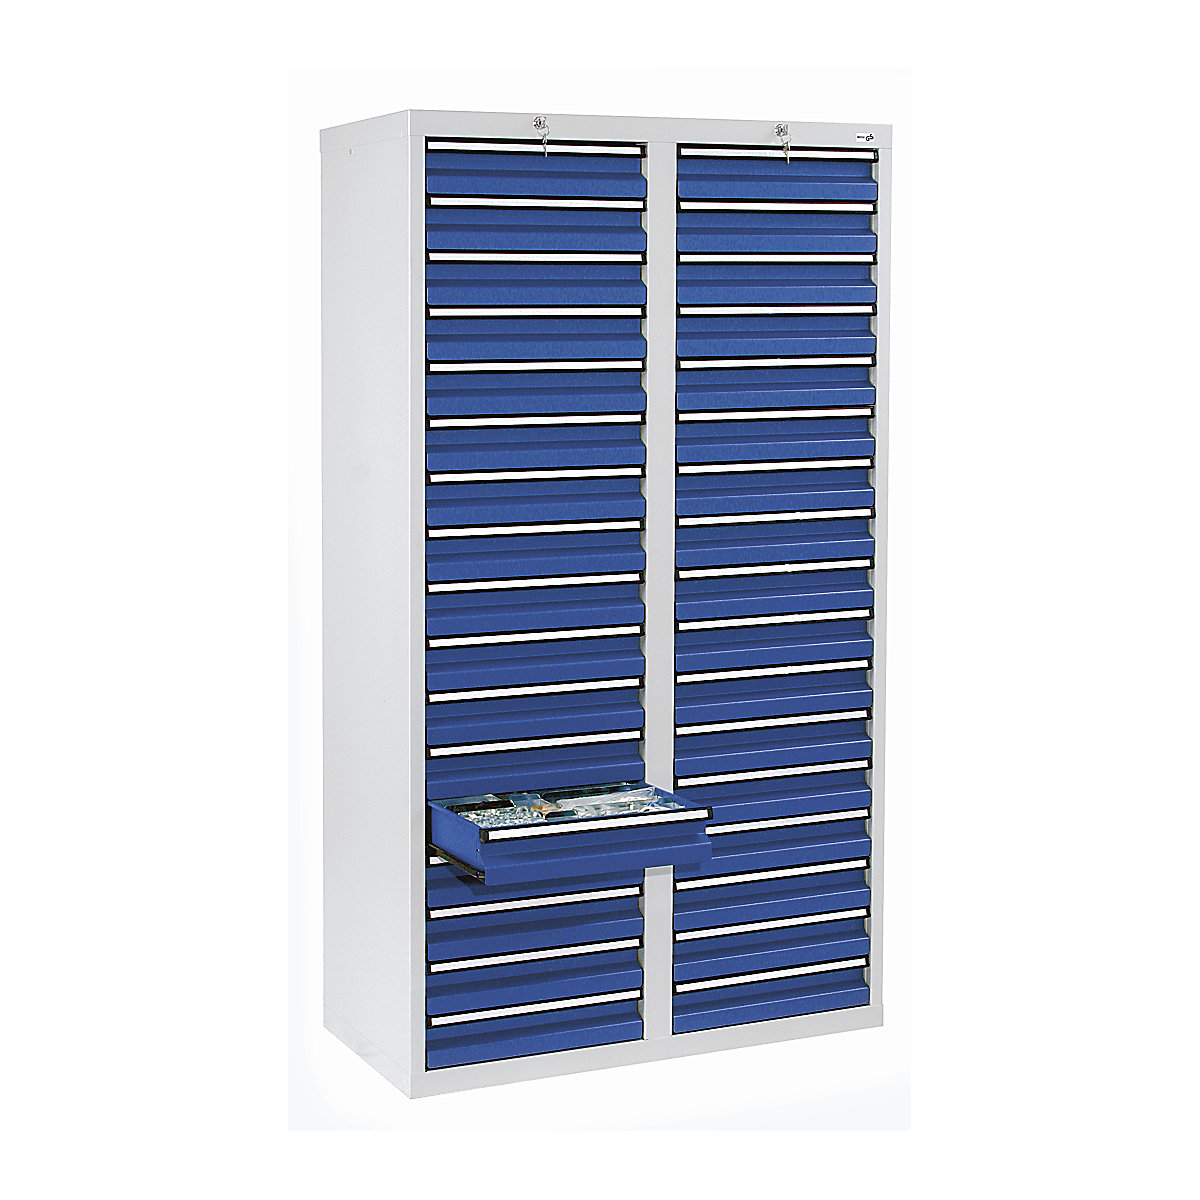 Zásuvková skříň, v x š x h 1800 x 1000 x 500 mm, 34 zásuvek 100 mm vysokých, korpus šedý, zásuvky hořcově modré-8